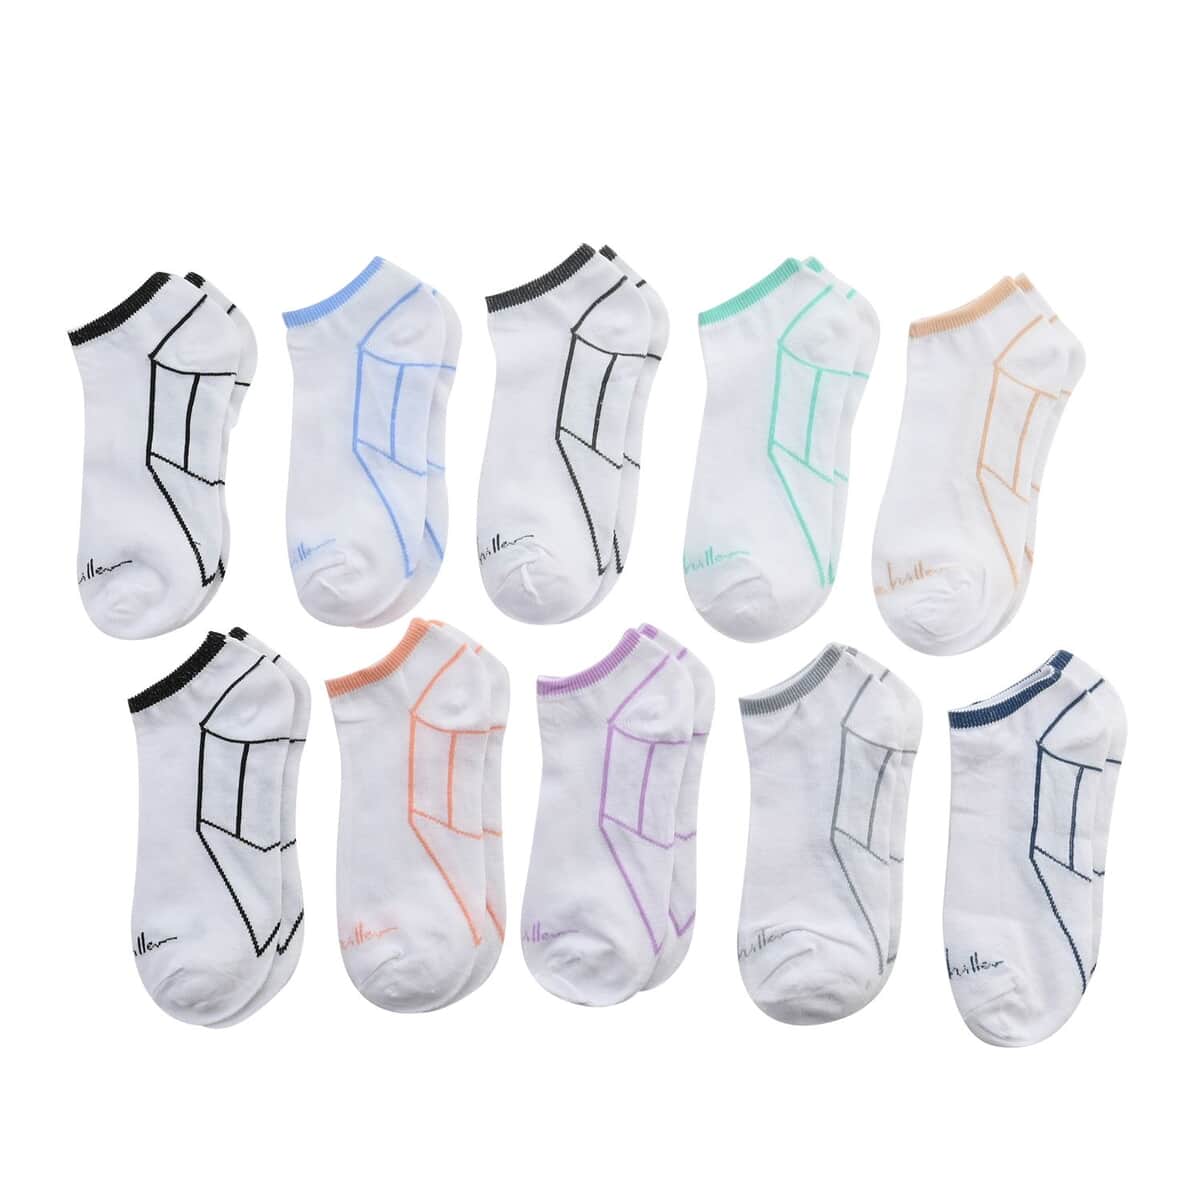 Nicole Miller 10 Pairs No Show Socks (Sizes 4-10) - White/Multi image number 0